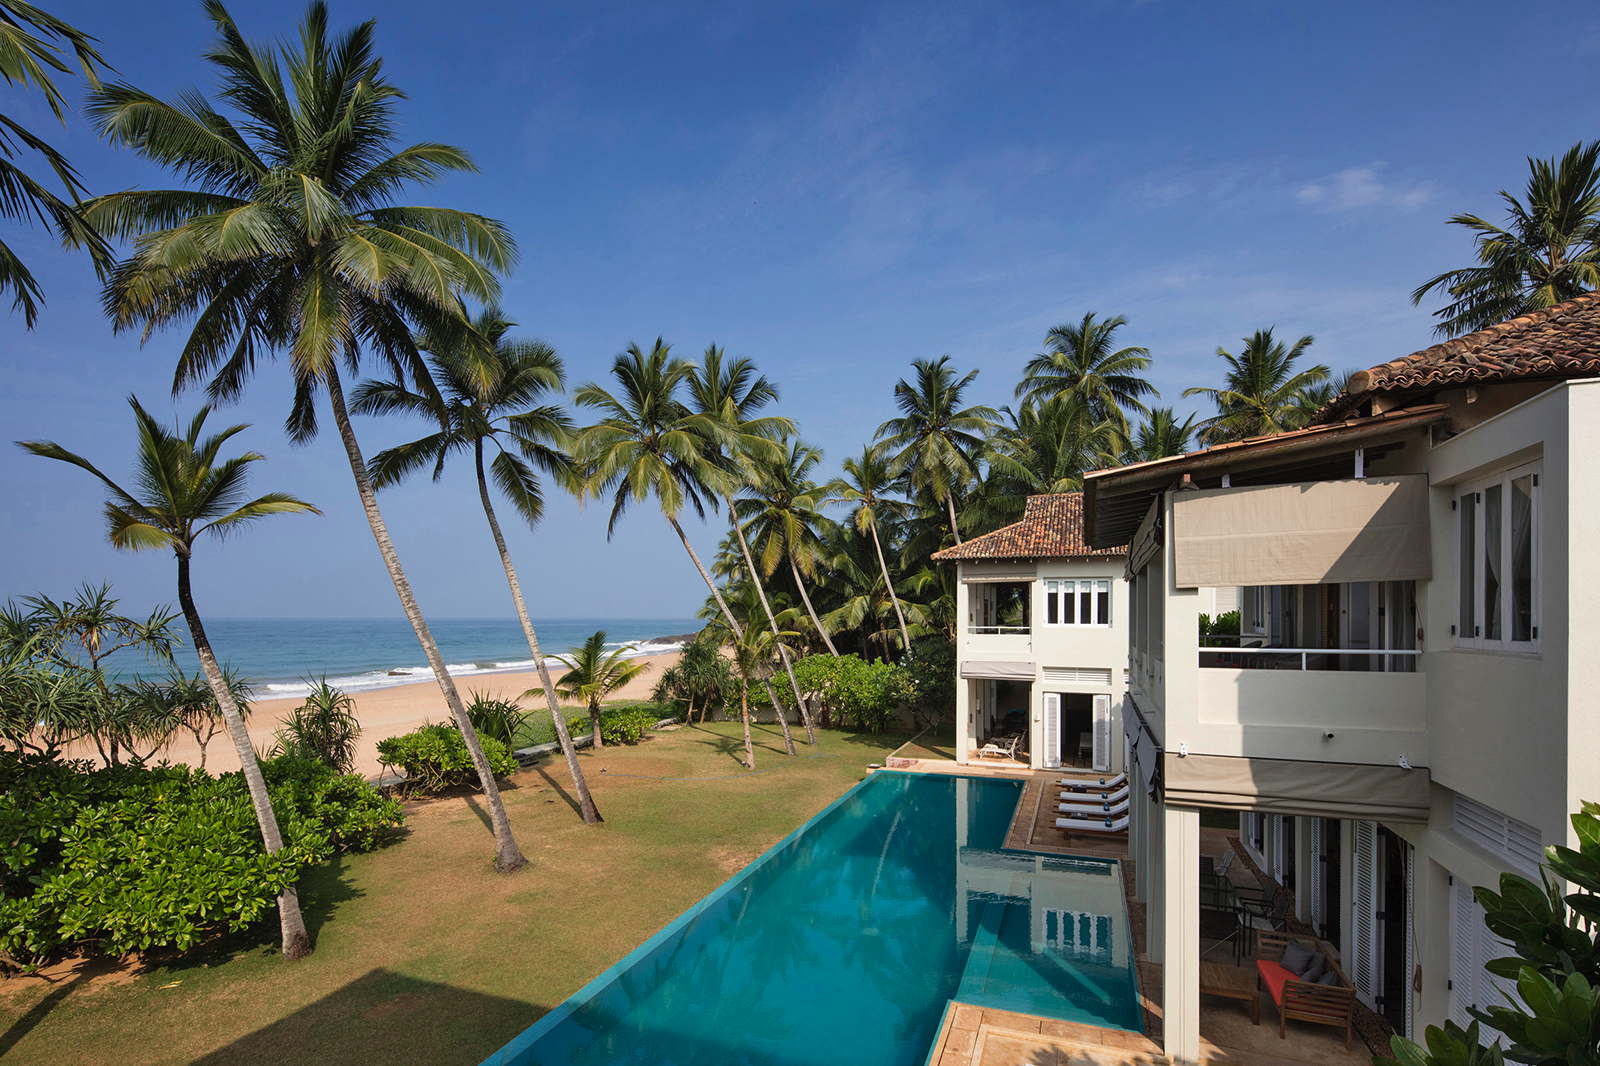 Ferienvilla am Strand mieten-Villa mit Pool und Service-Sri Lanka-Induruwa